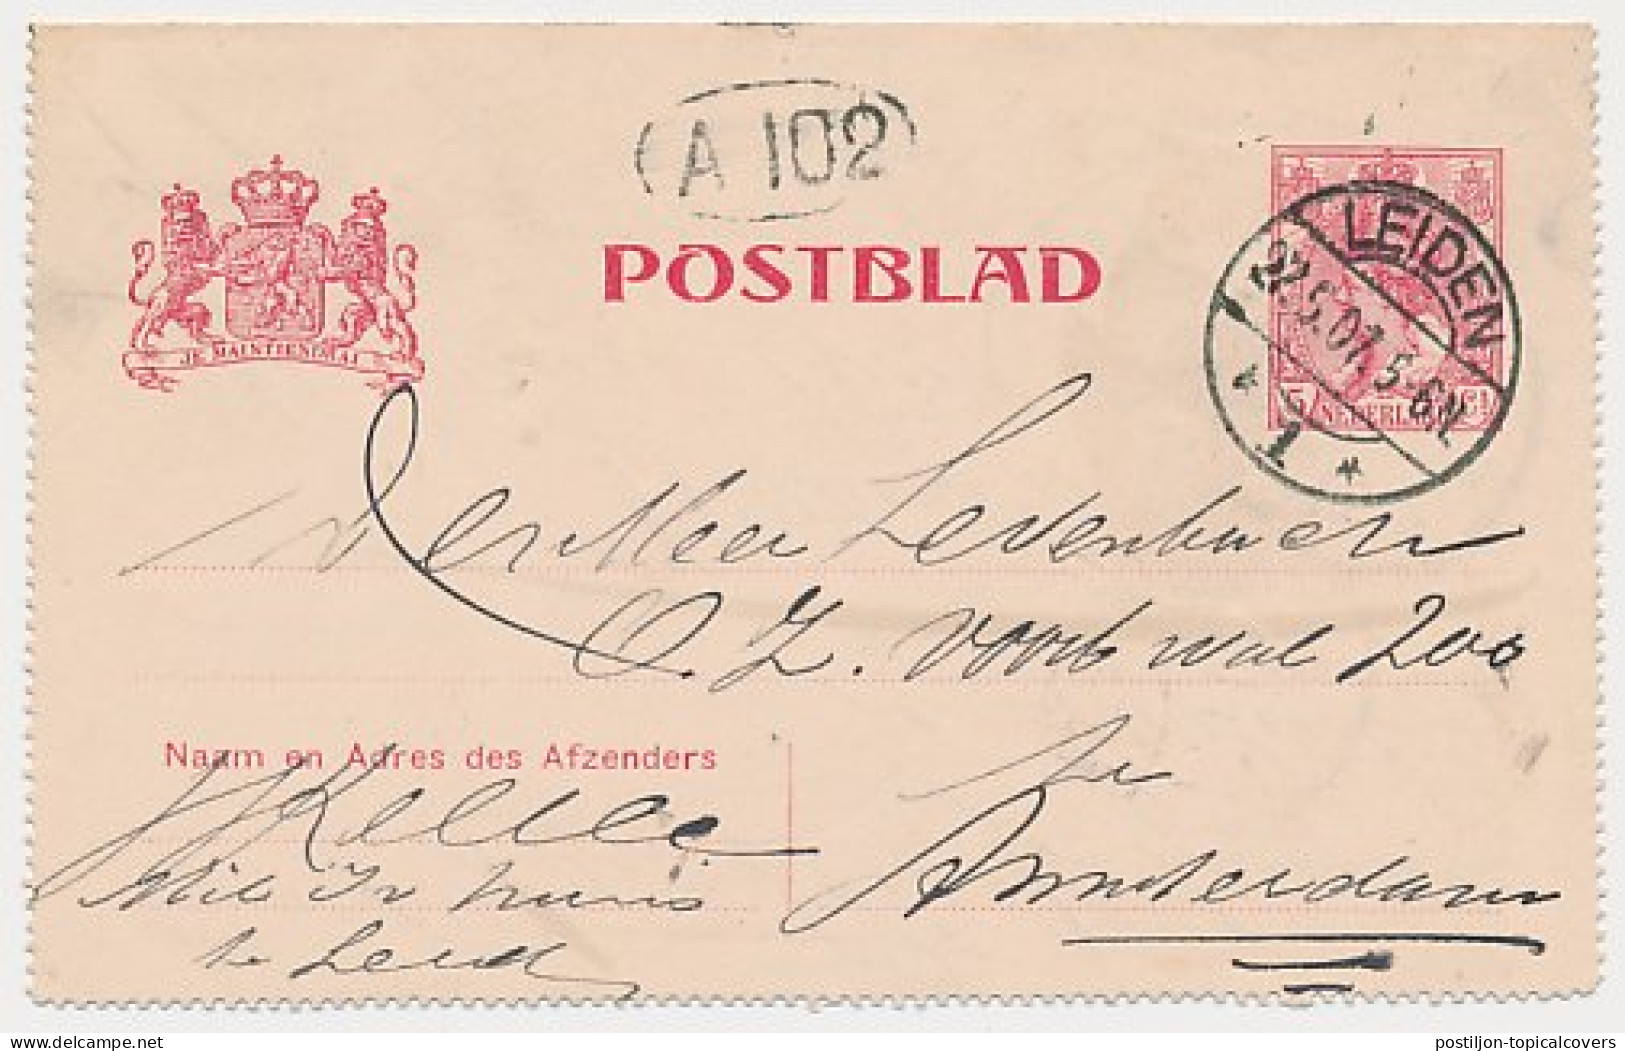 Postblad G. 10 Leiden - Amsterdam  - Interi Postali